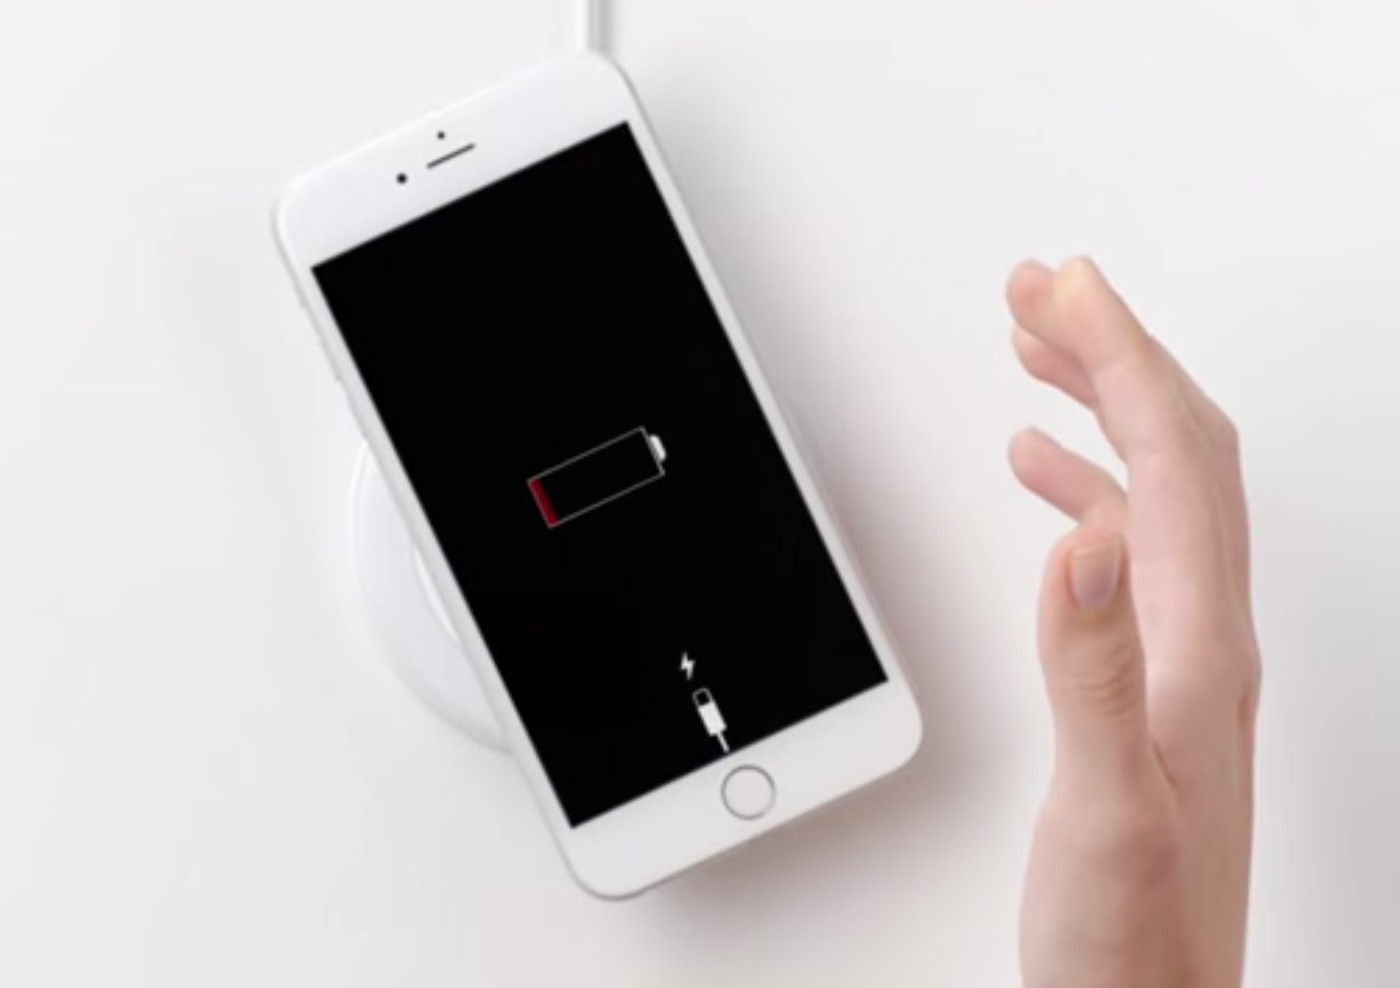 Samsung mocks lack of wireless charging on iPhone 6 Plus